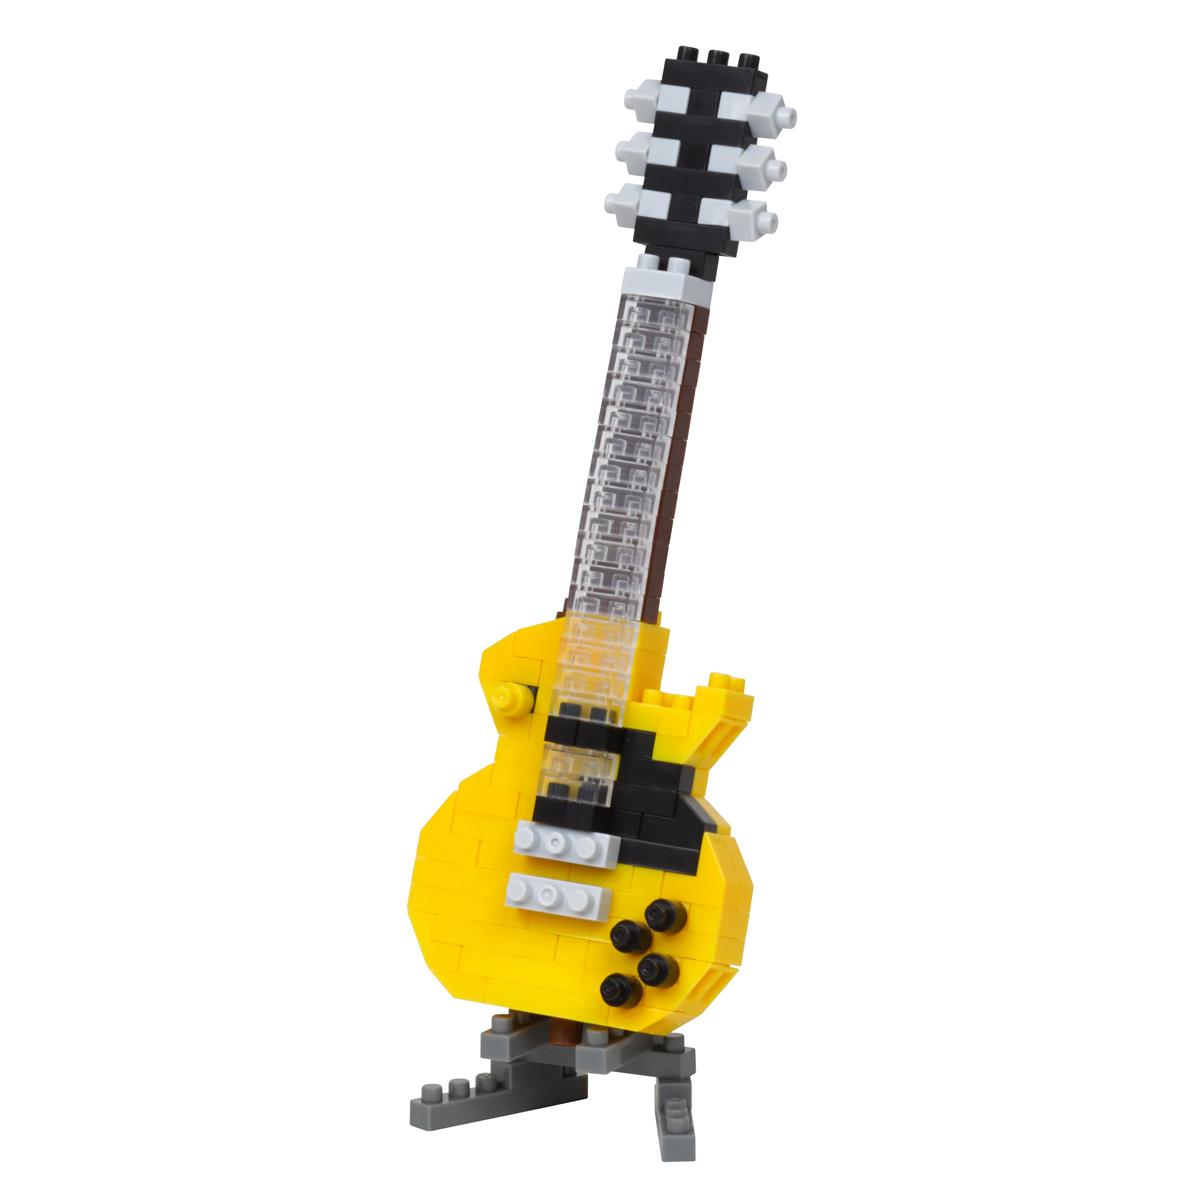 NBC-347 - yellow electric guitar